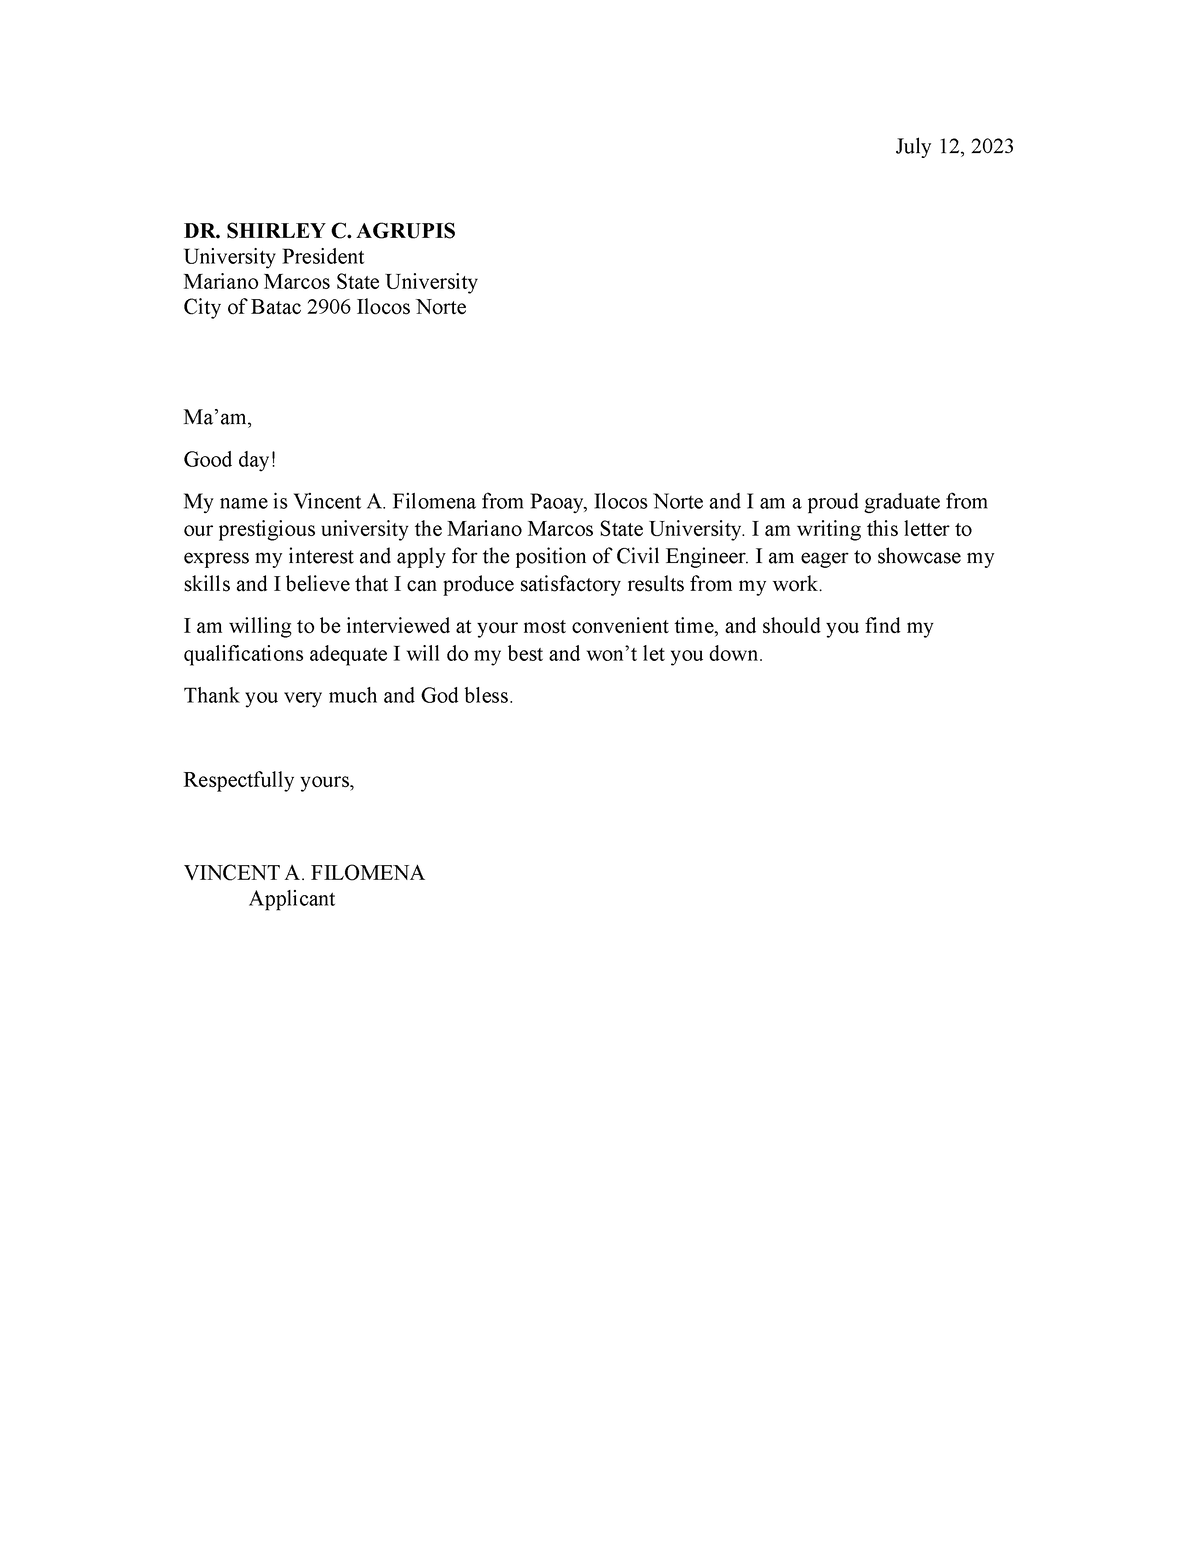 Application-letter-MMSU - July 12, 2023 DR. SHIRLEY C. AGRUPIS ...